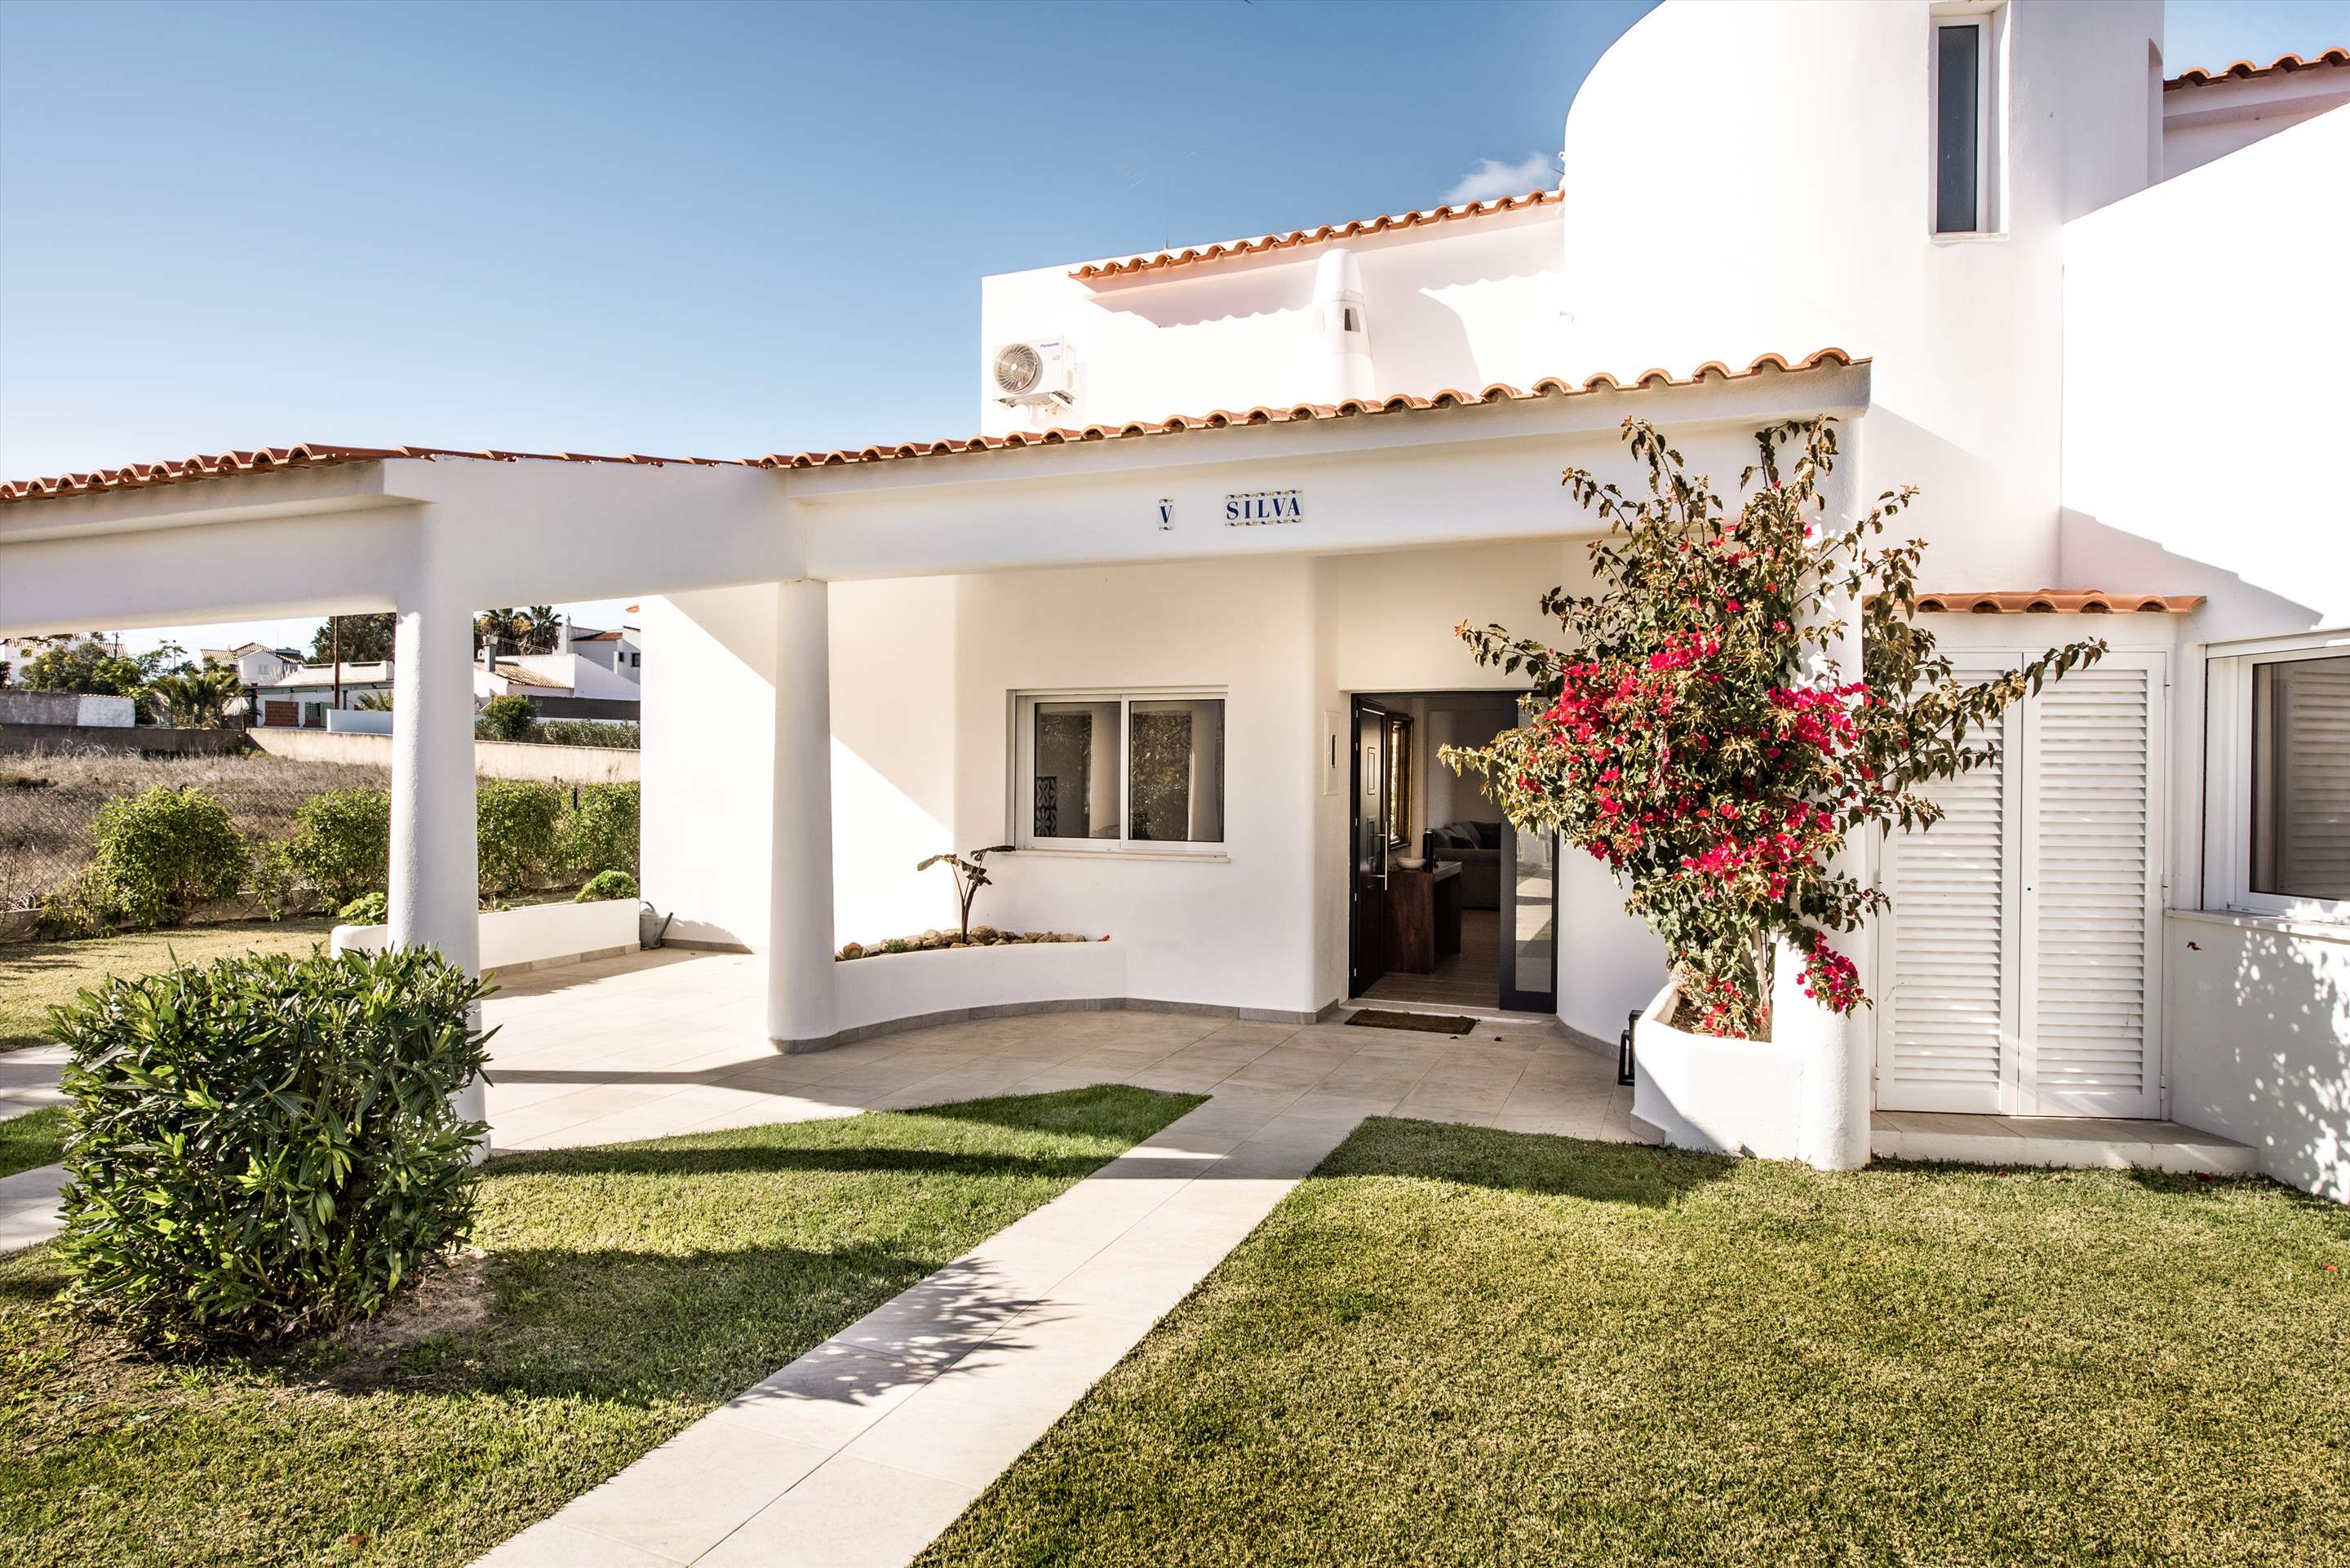 Villa Silva, 4 bedroom villa in Gale, Vale da Parra and Guia, Algarve Photo #29